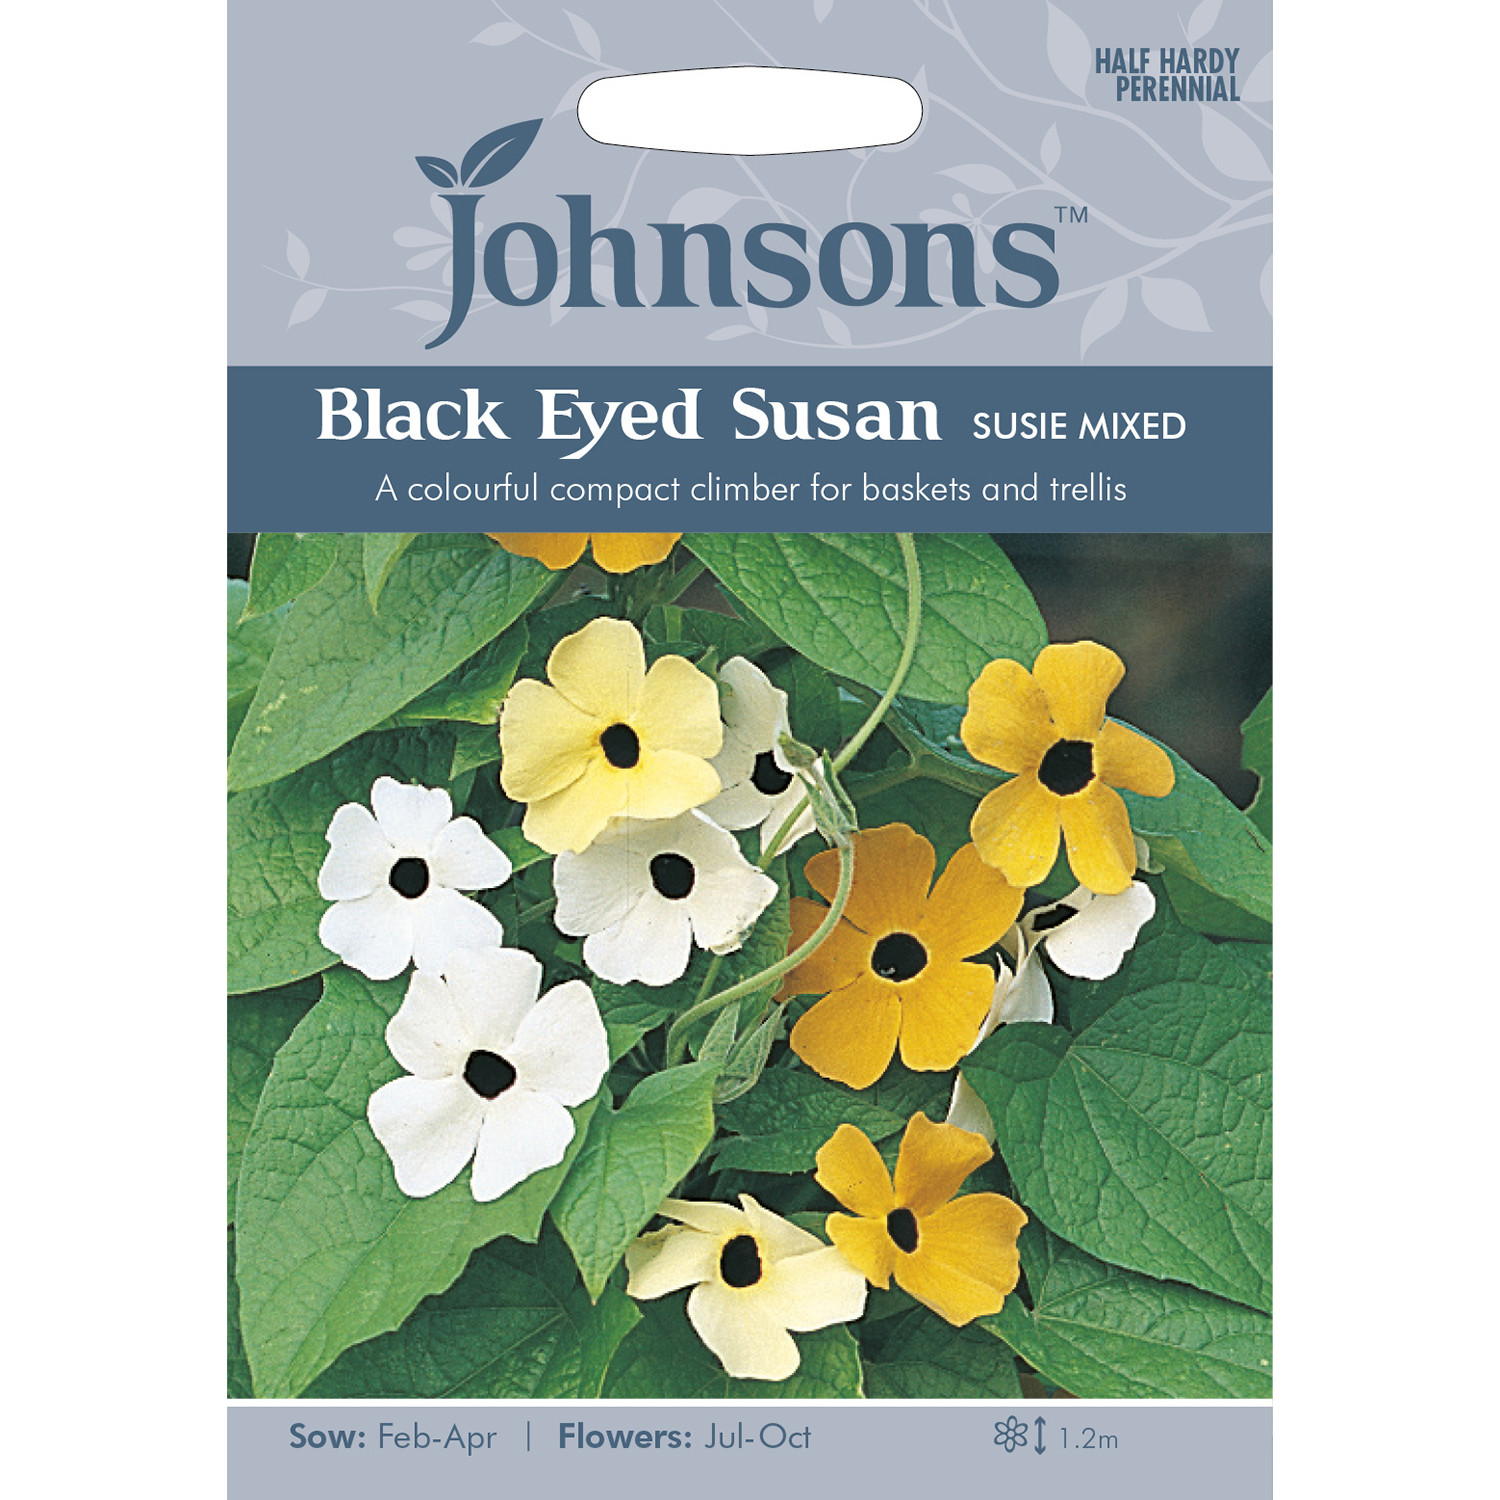 Johnsons Black Eyed Susan Susie Mixed Flower Seeds Image 2